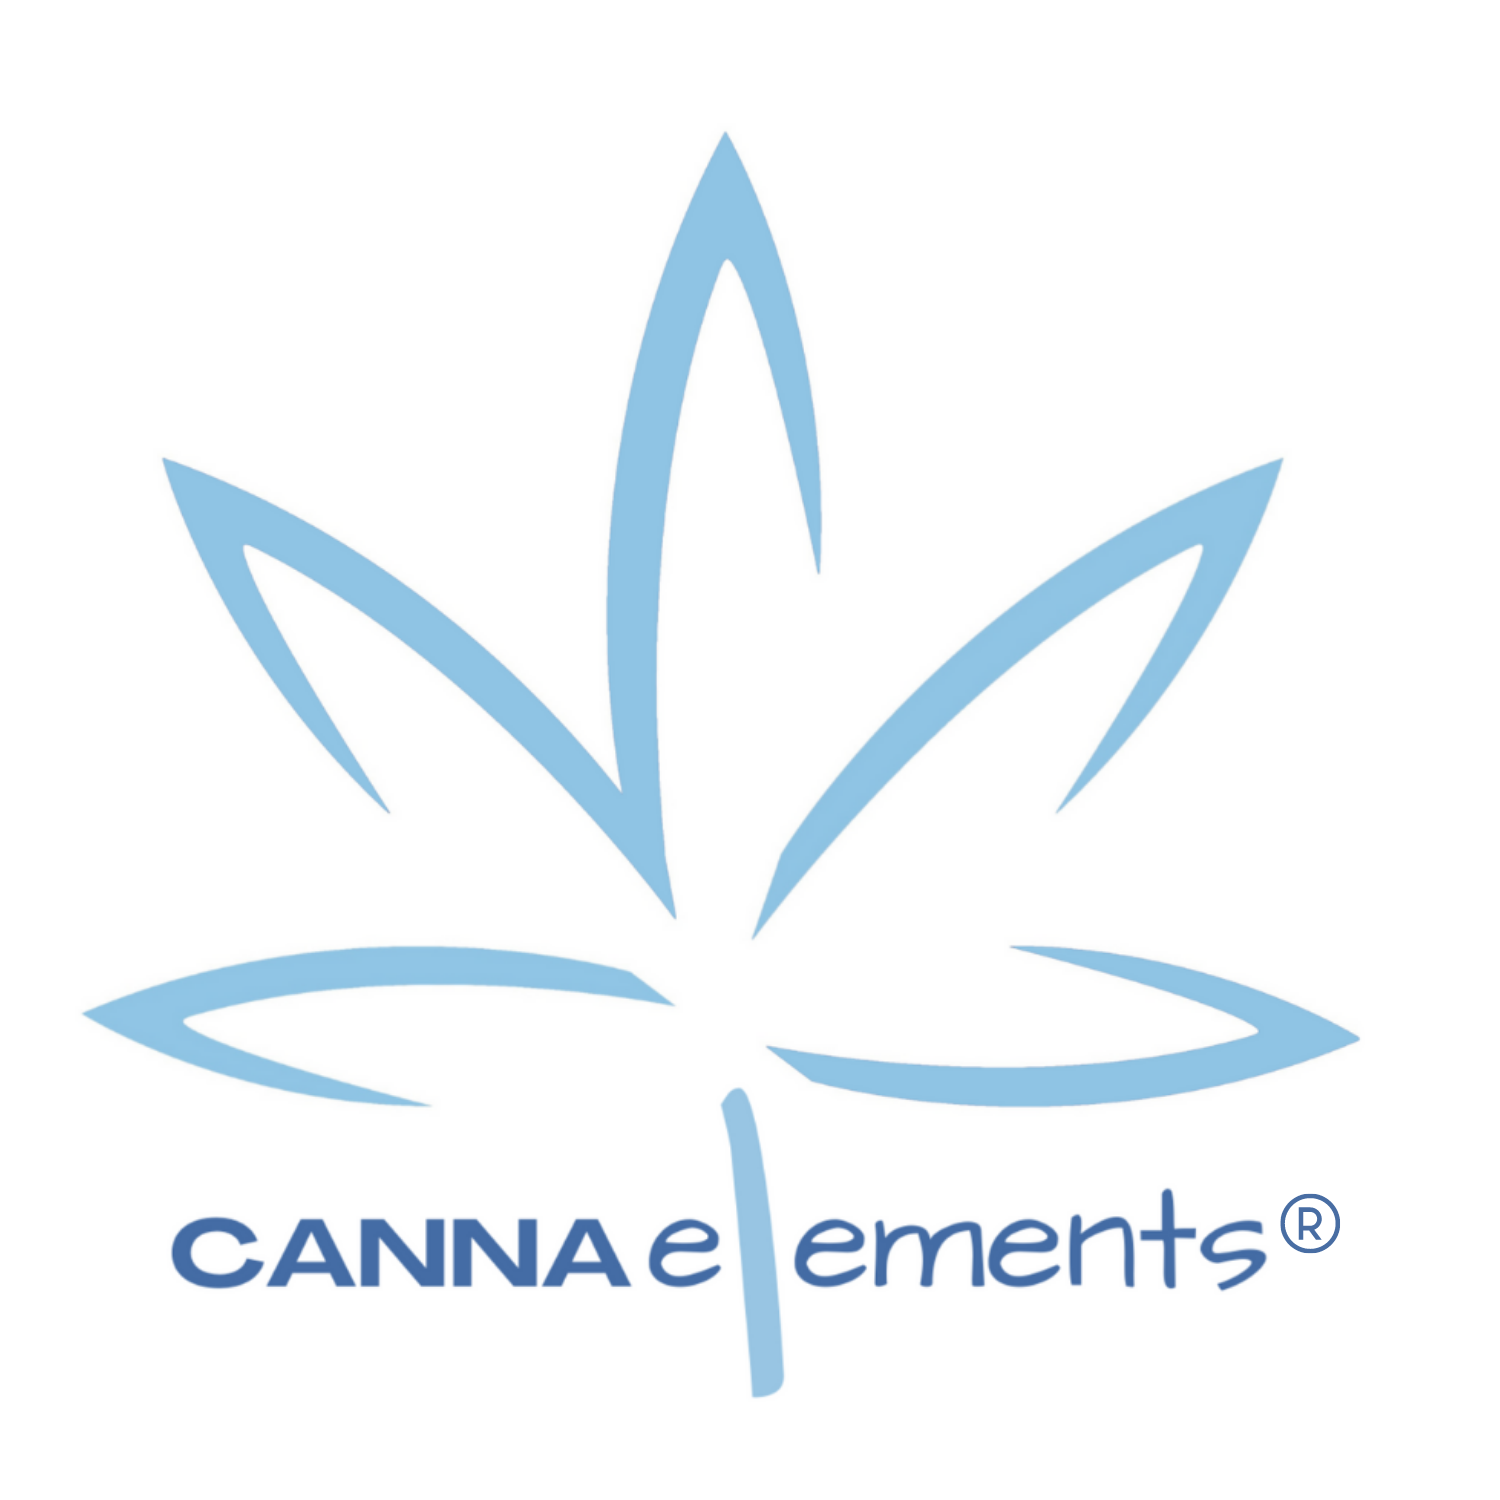 Canna Elements